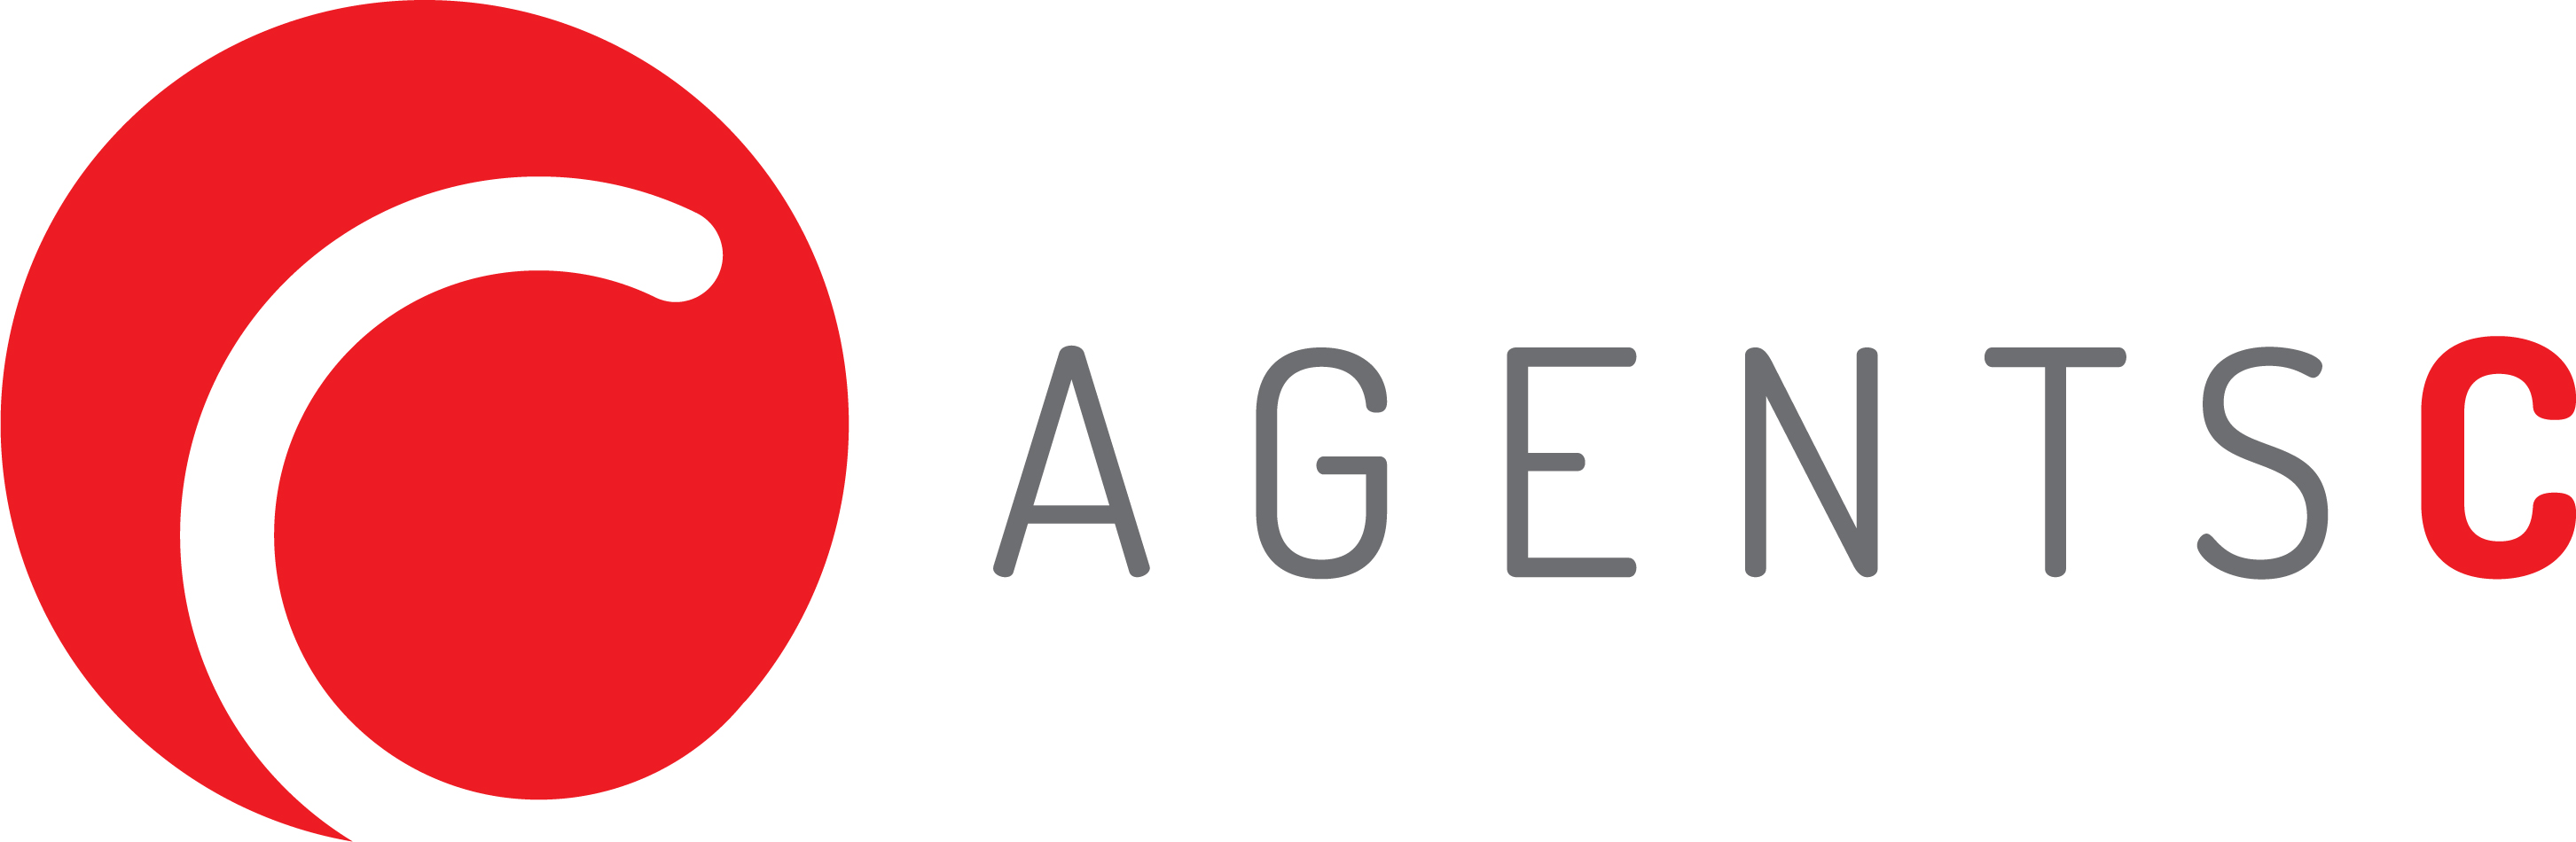 AgentsC logo